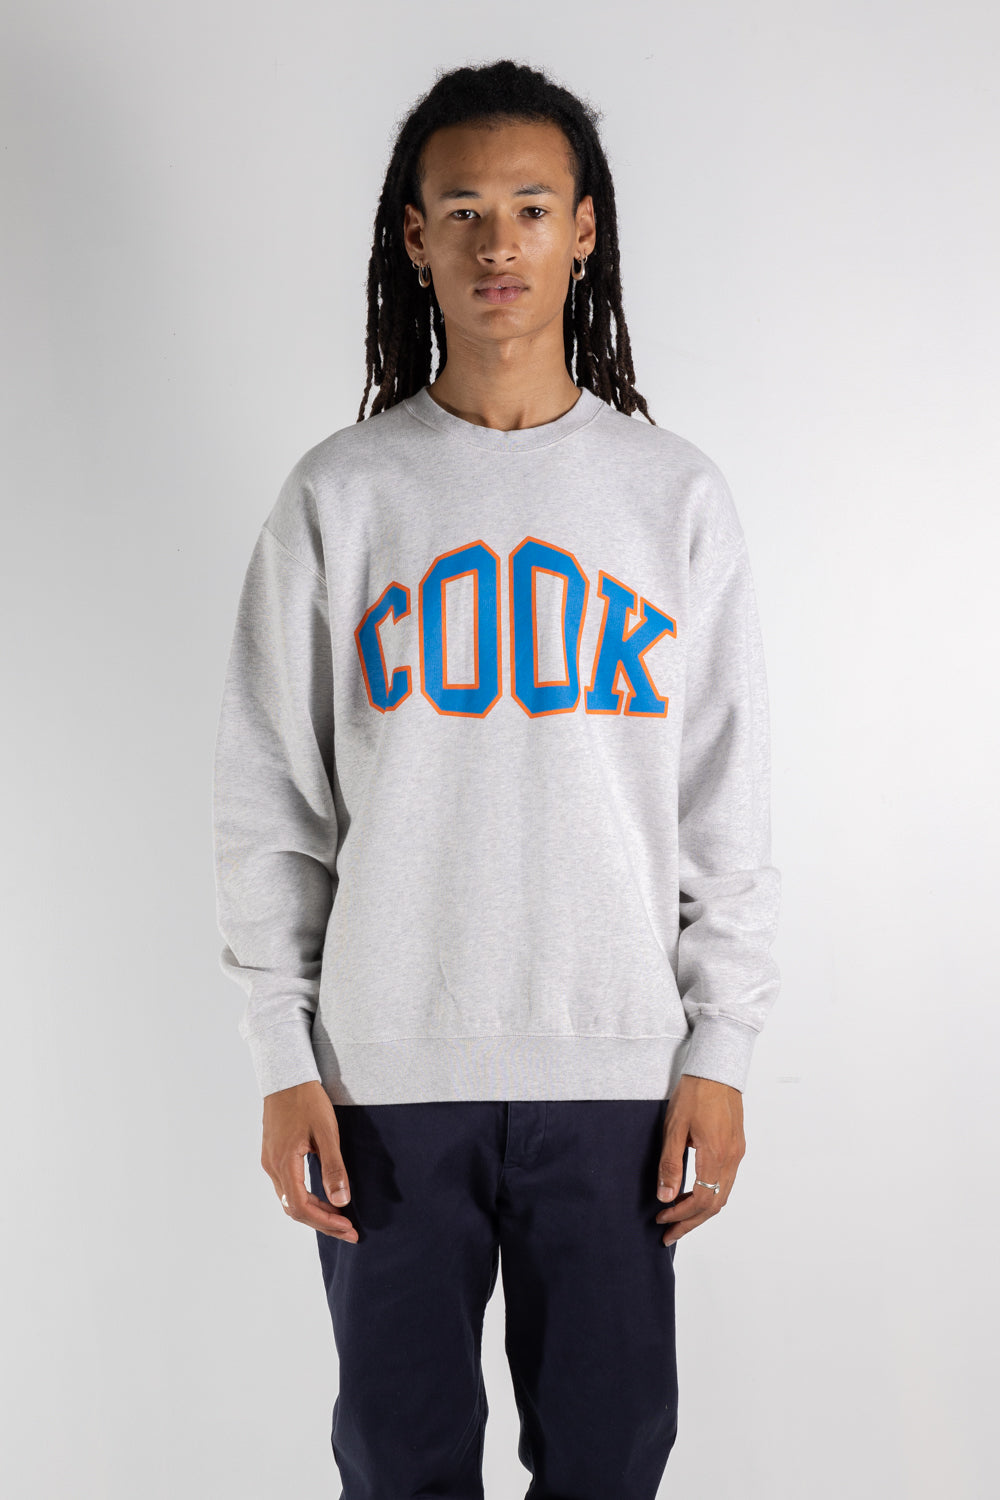 Men's Fashion Sweatshirt | Reception Club Sweat Cook | The standard store